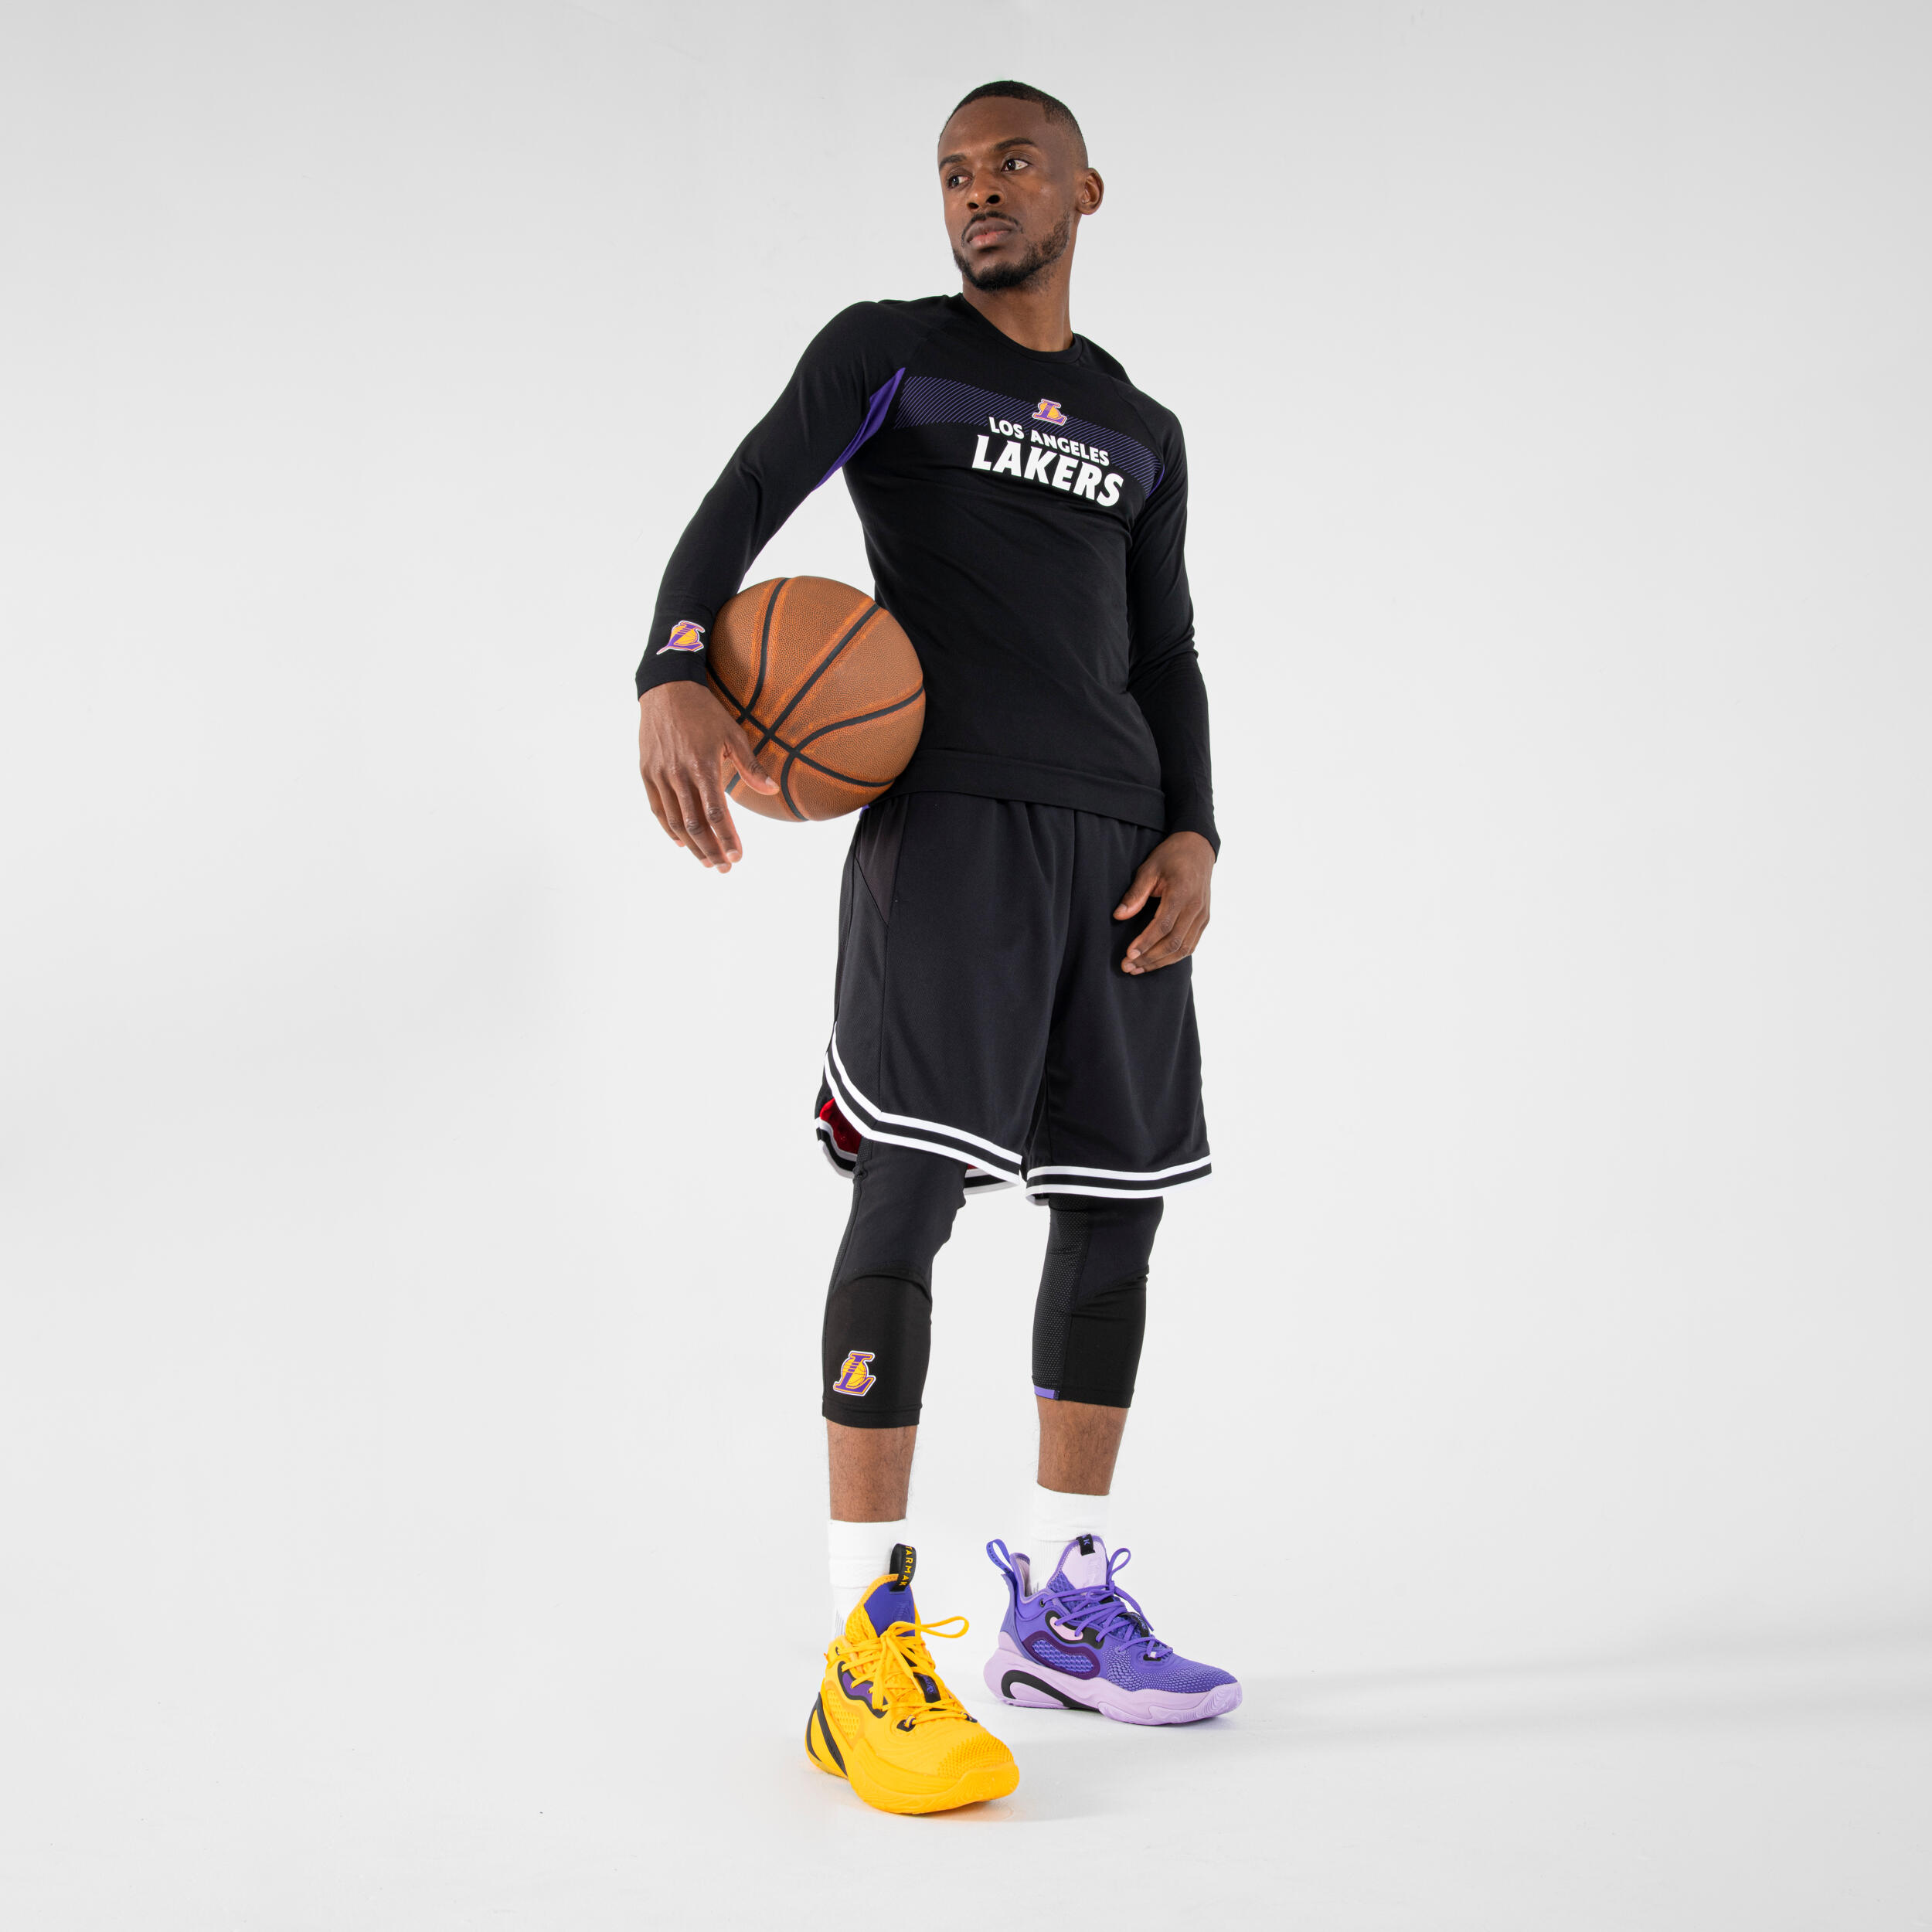 Men's/Women's Basketball Shoes SE900 - Purple/NBA Los Angeles Lakers 16/17